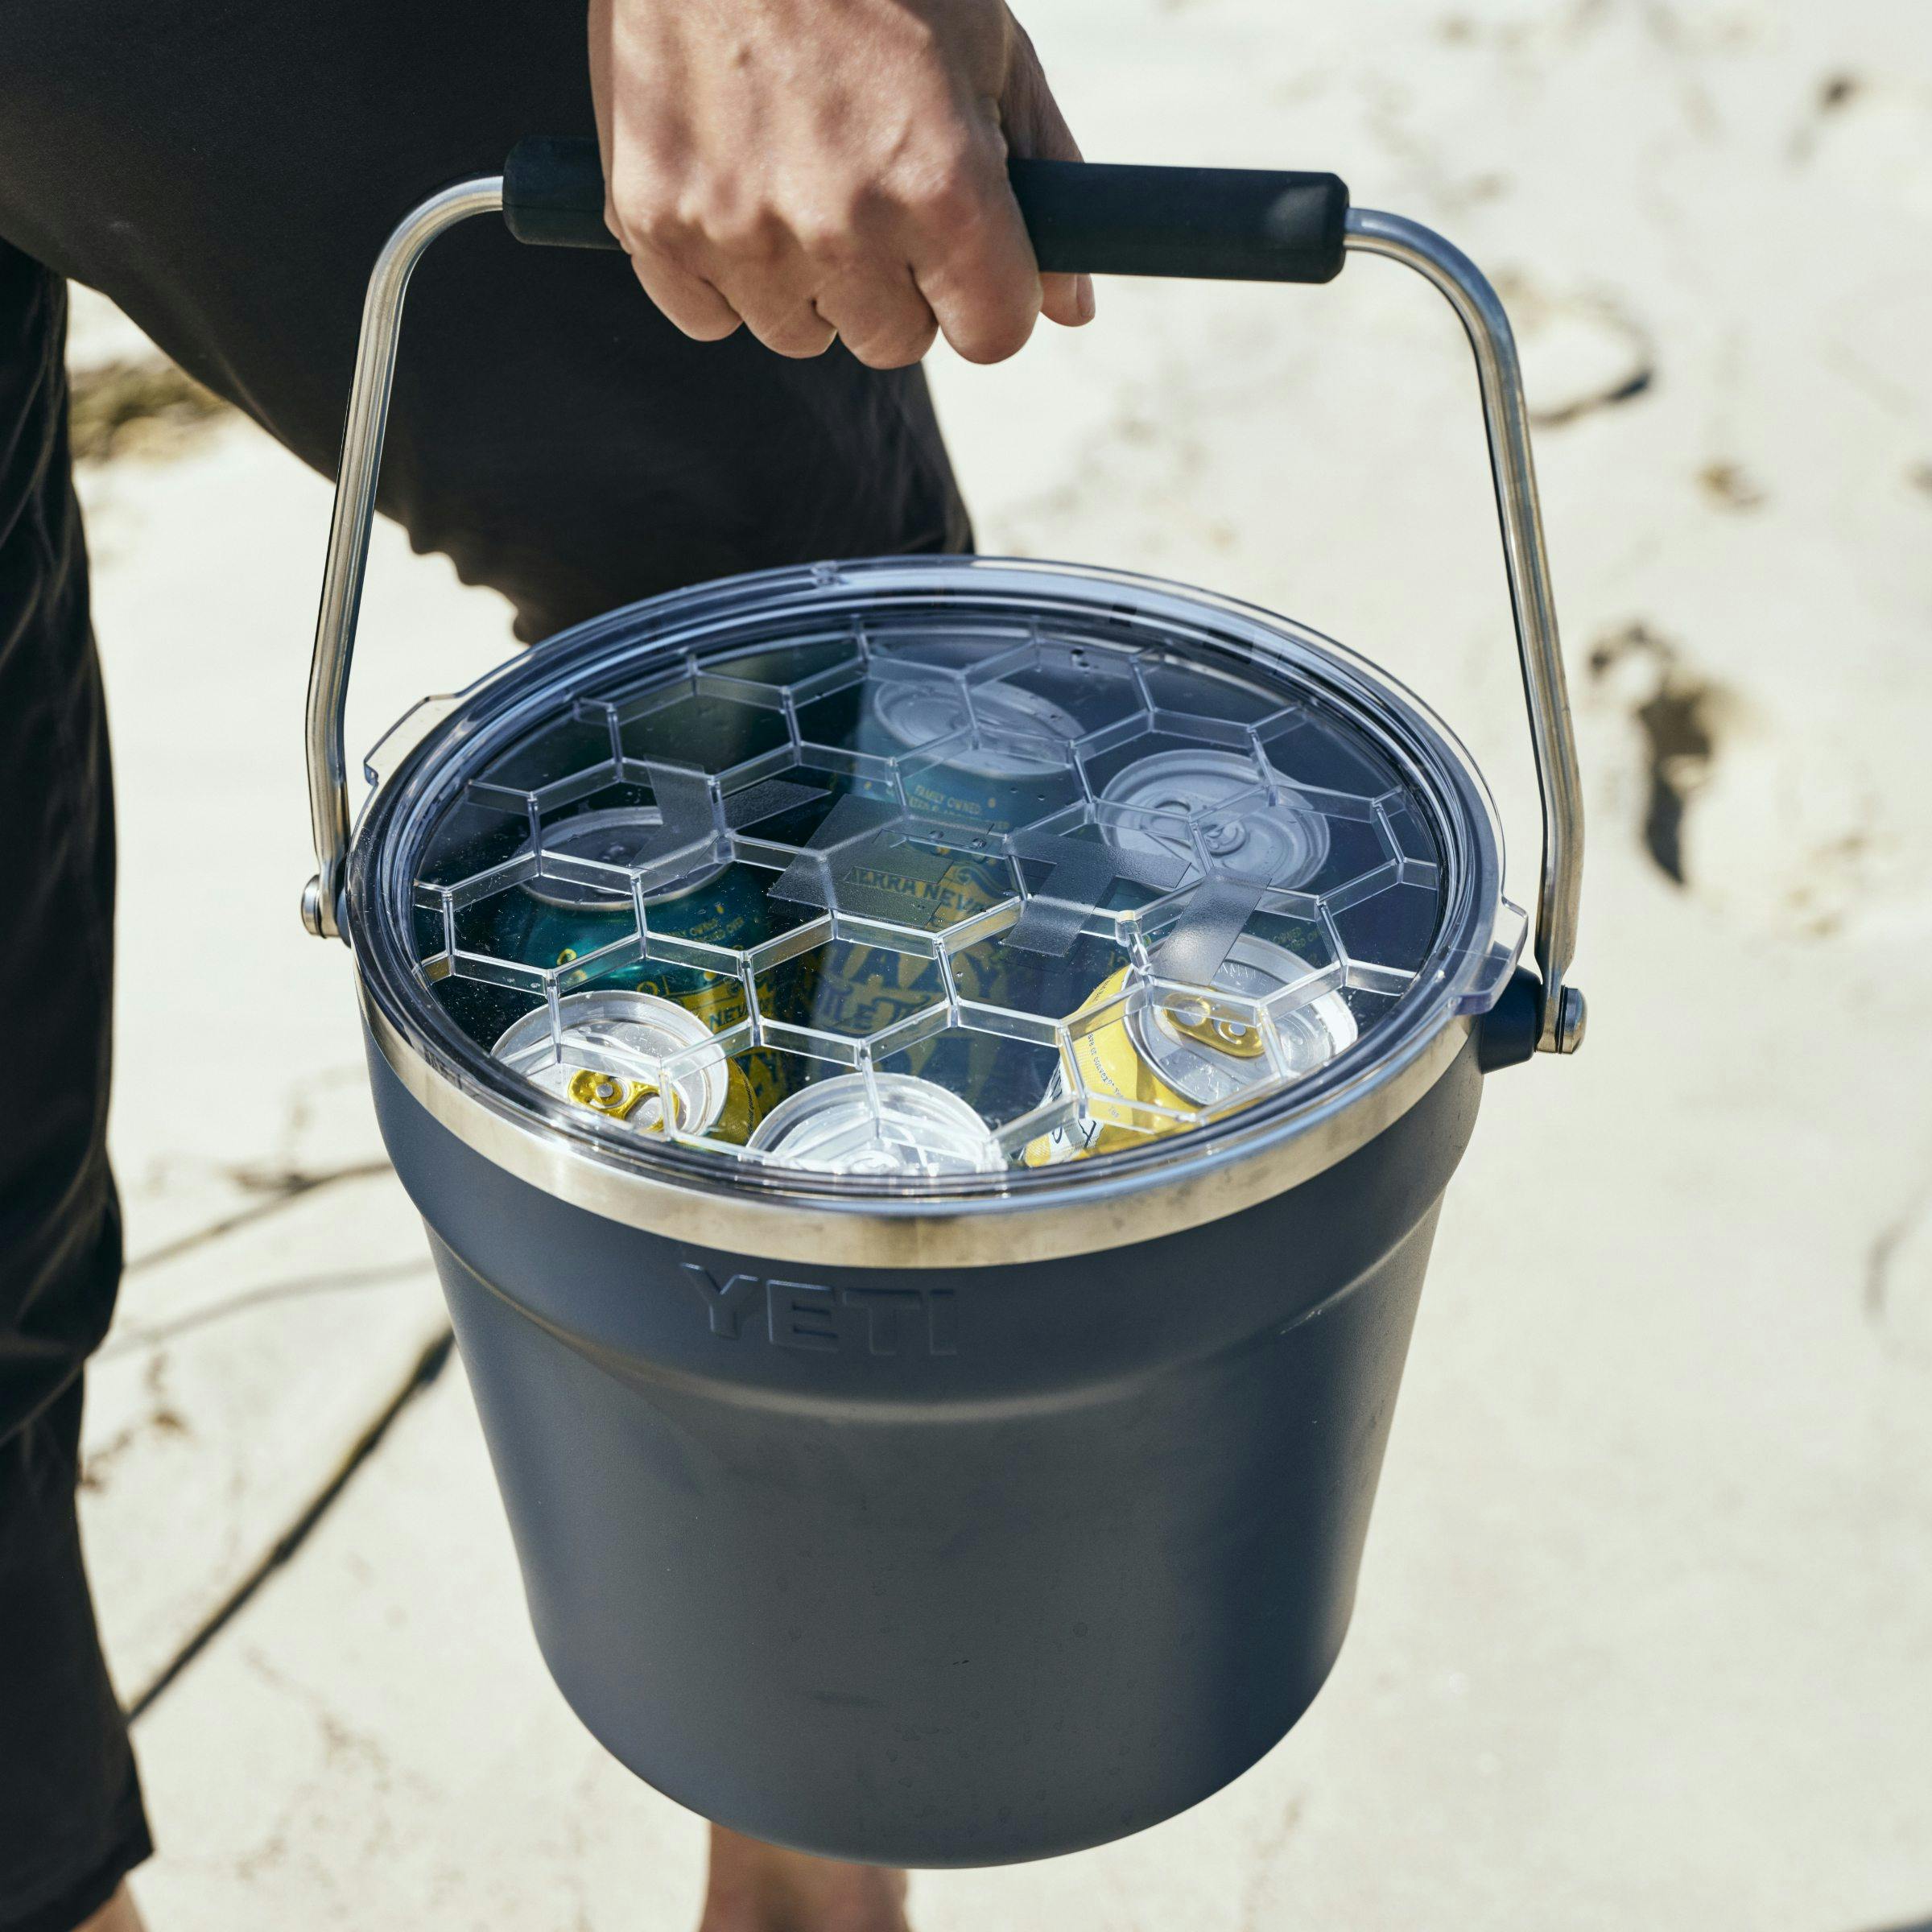 Meet the All-New Rambler™ Beverage Bucket - Yeti